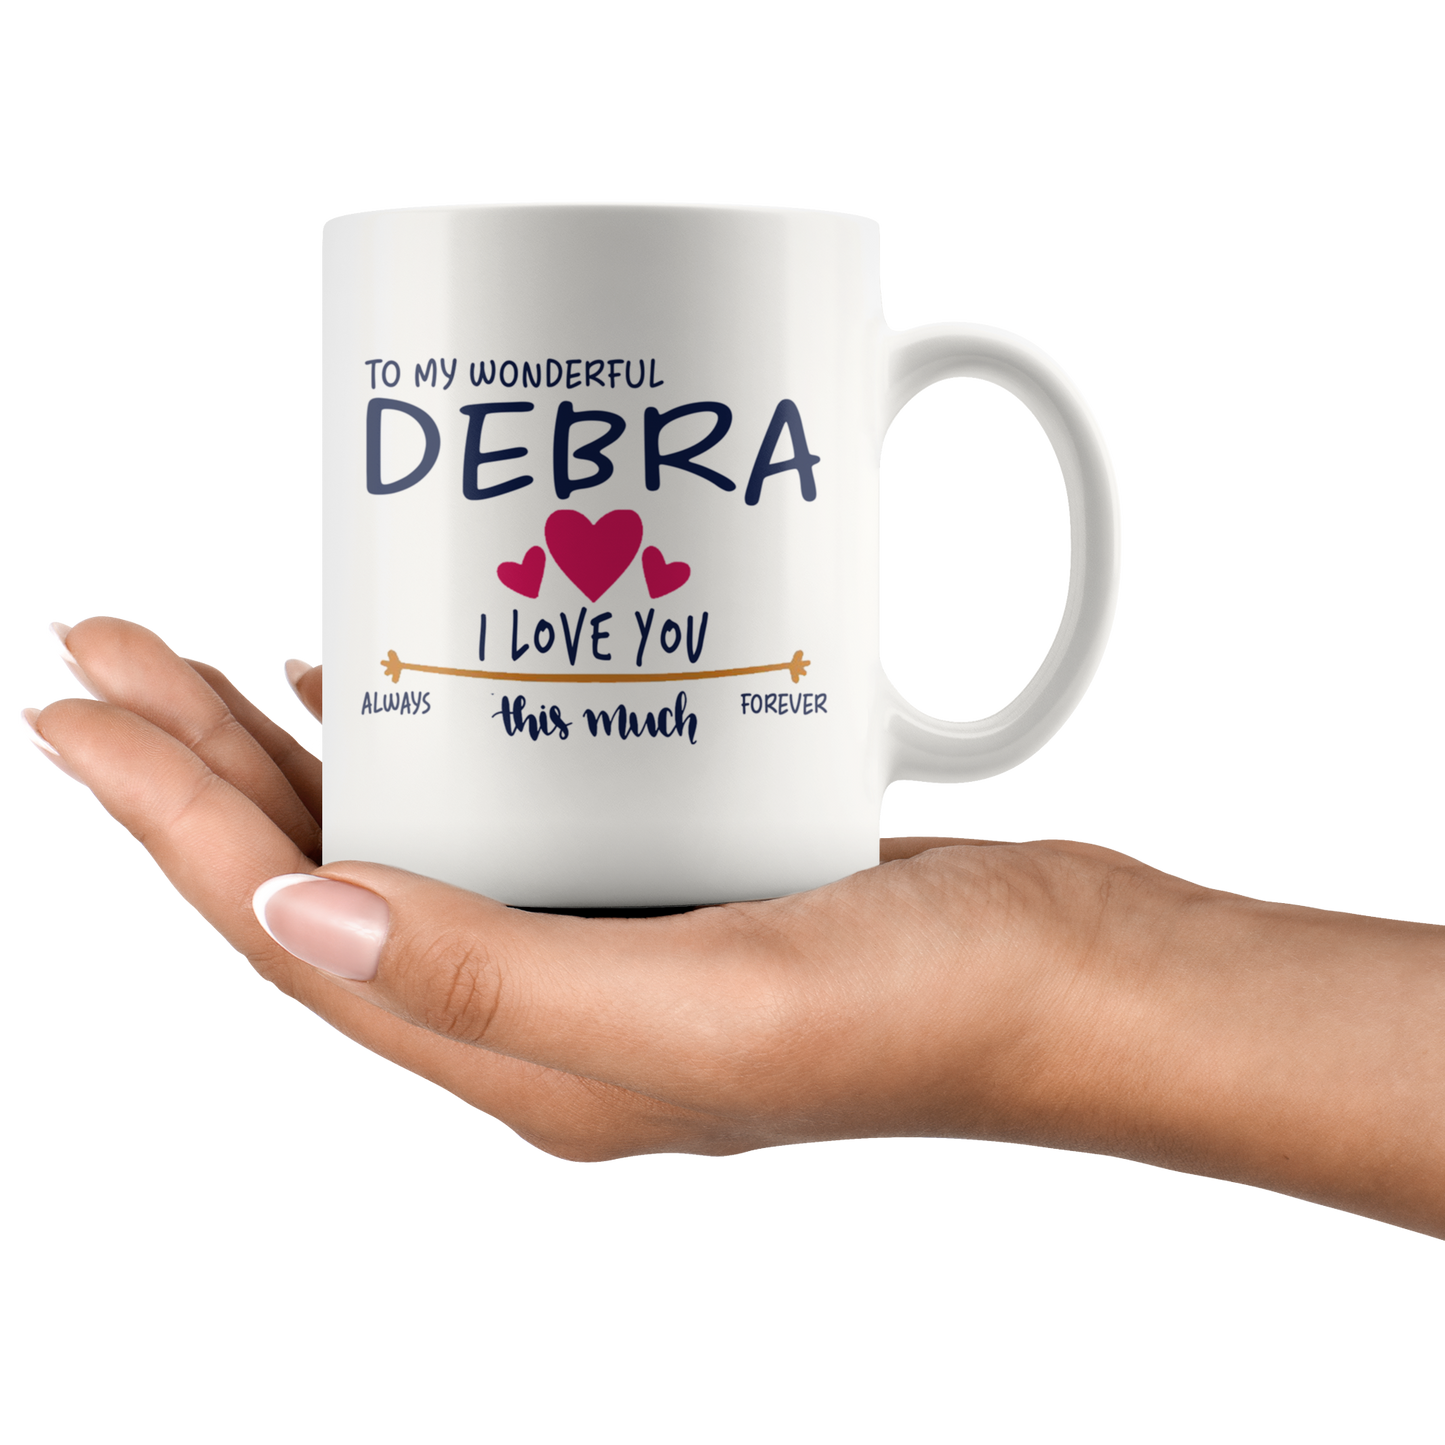 M-20477777-sp-18682 - Mother Day Gift For Wife Coffee Mug - To My Wonderful Debra